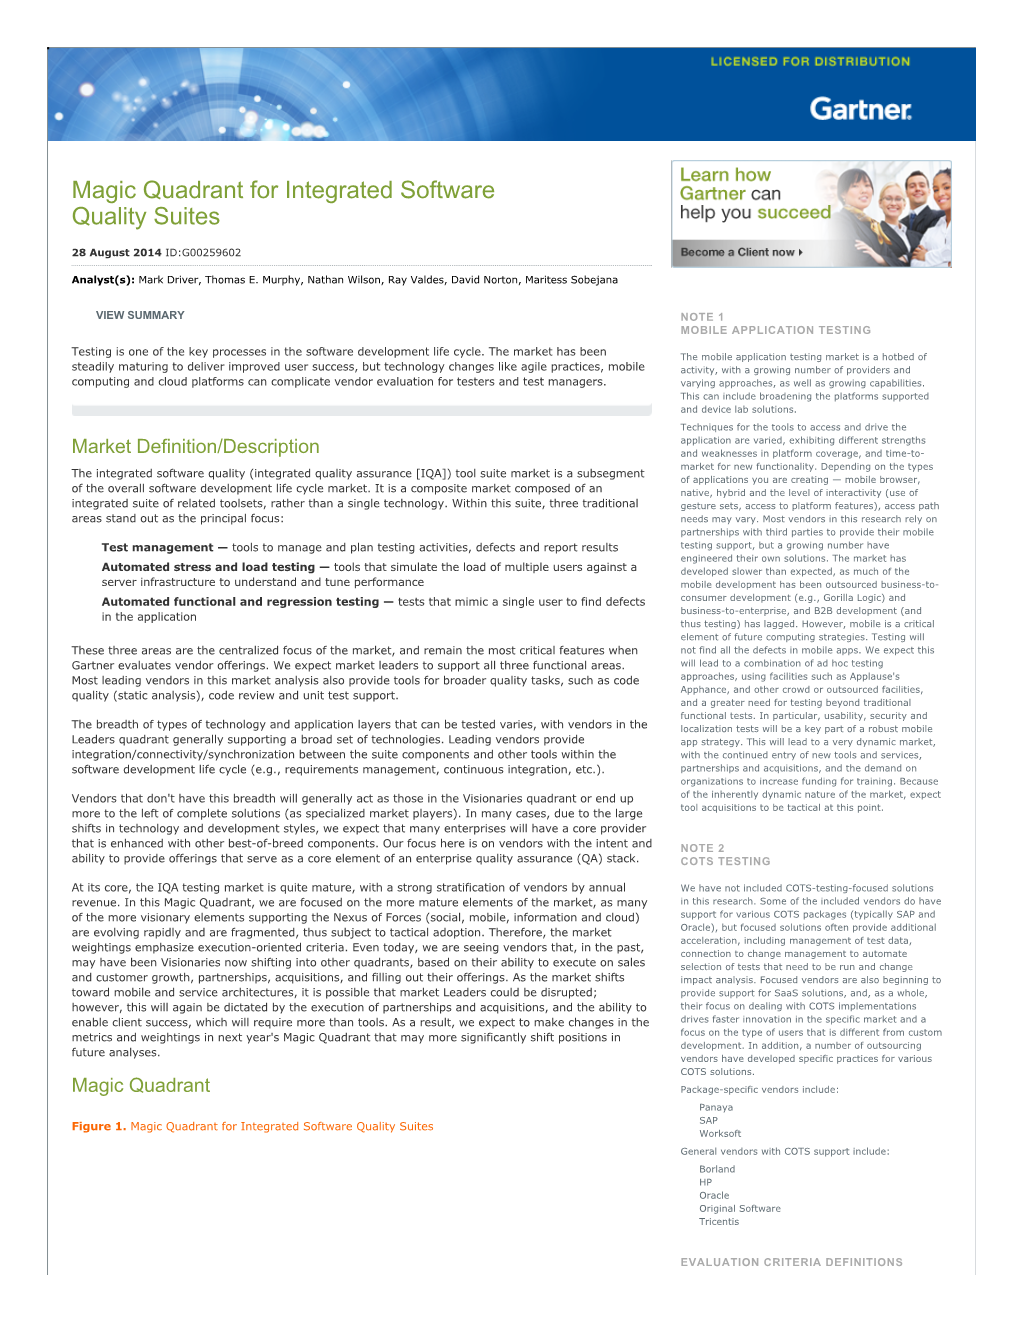 Magic Quadrant for Integrated Software Quality Suites